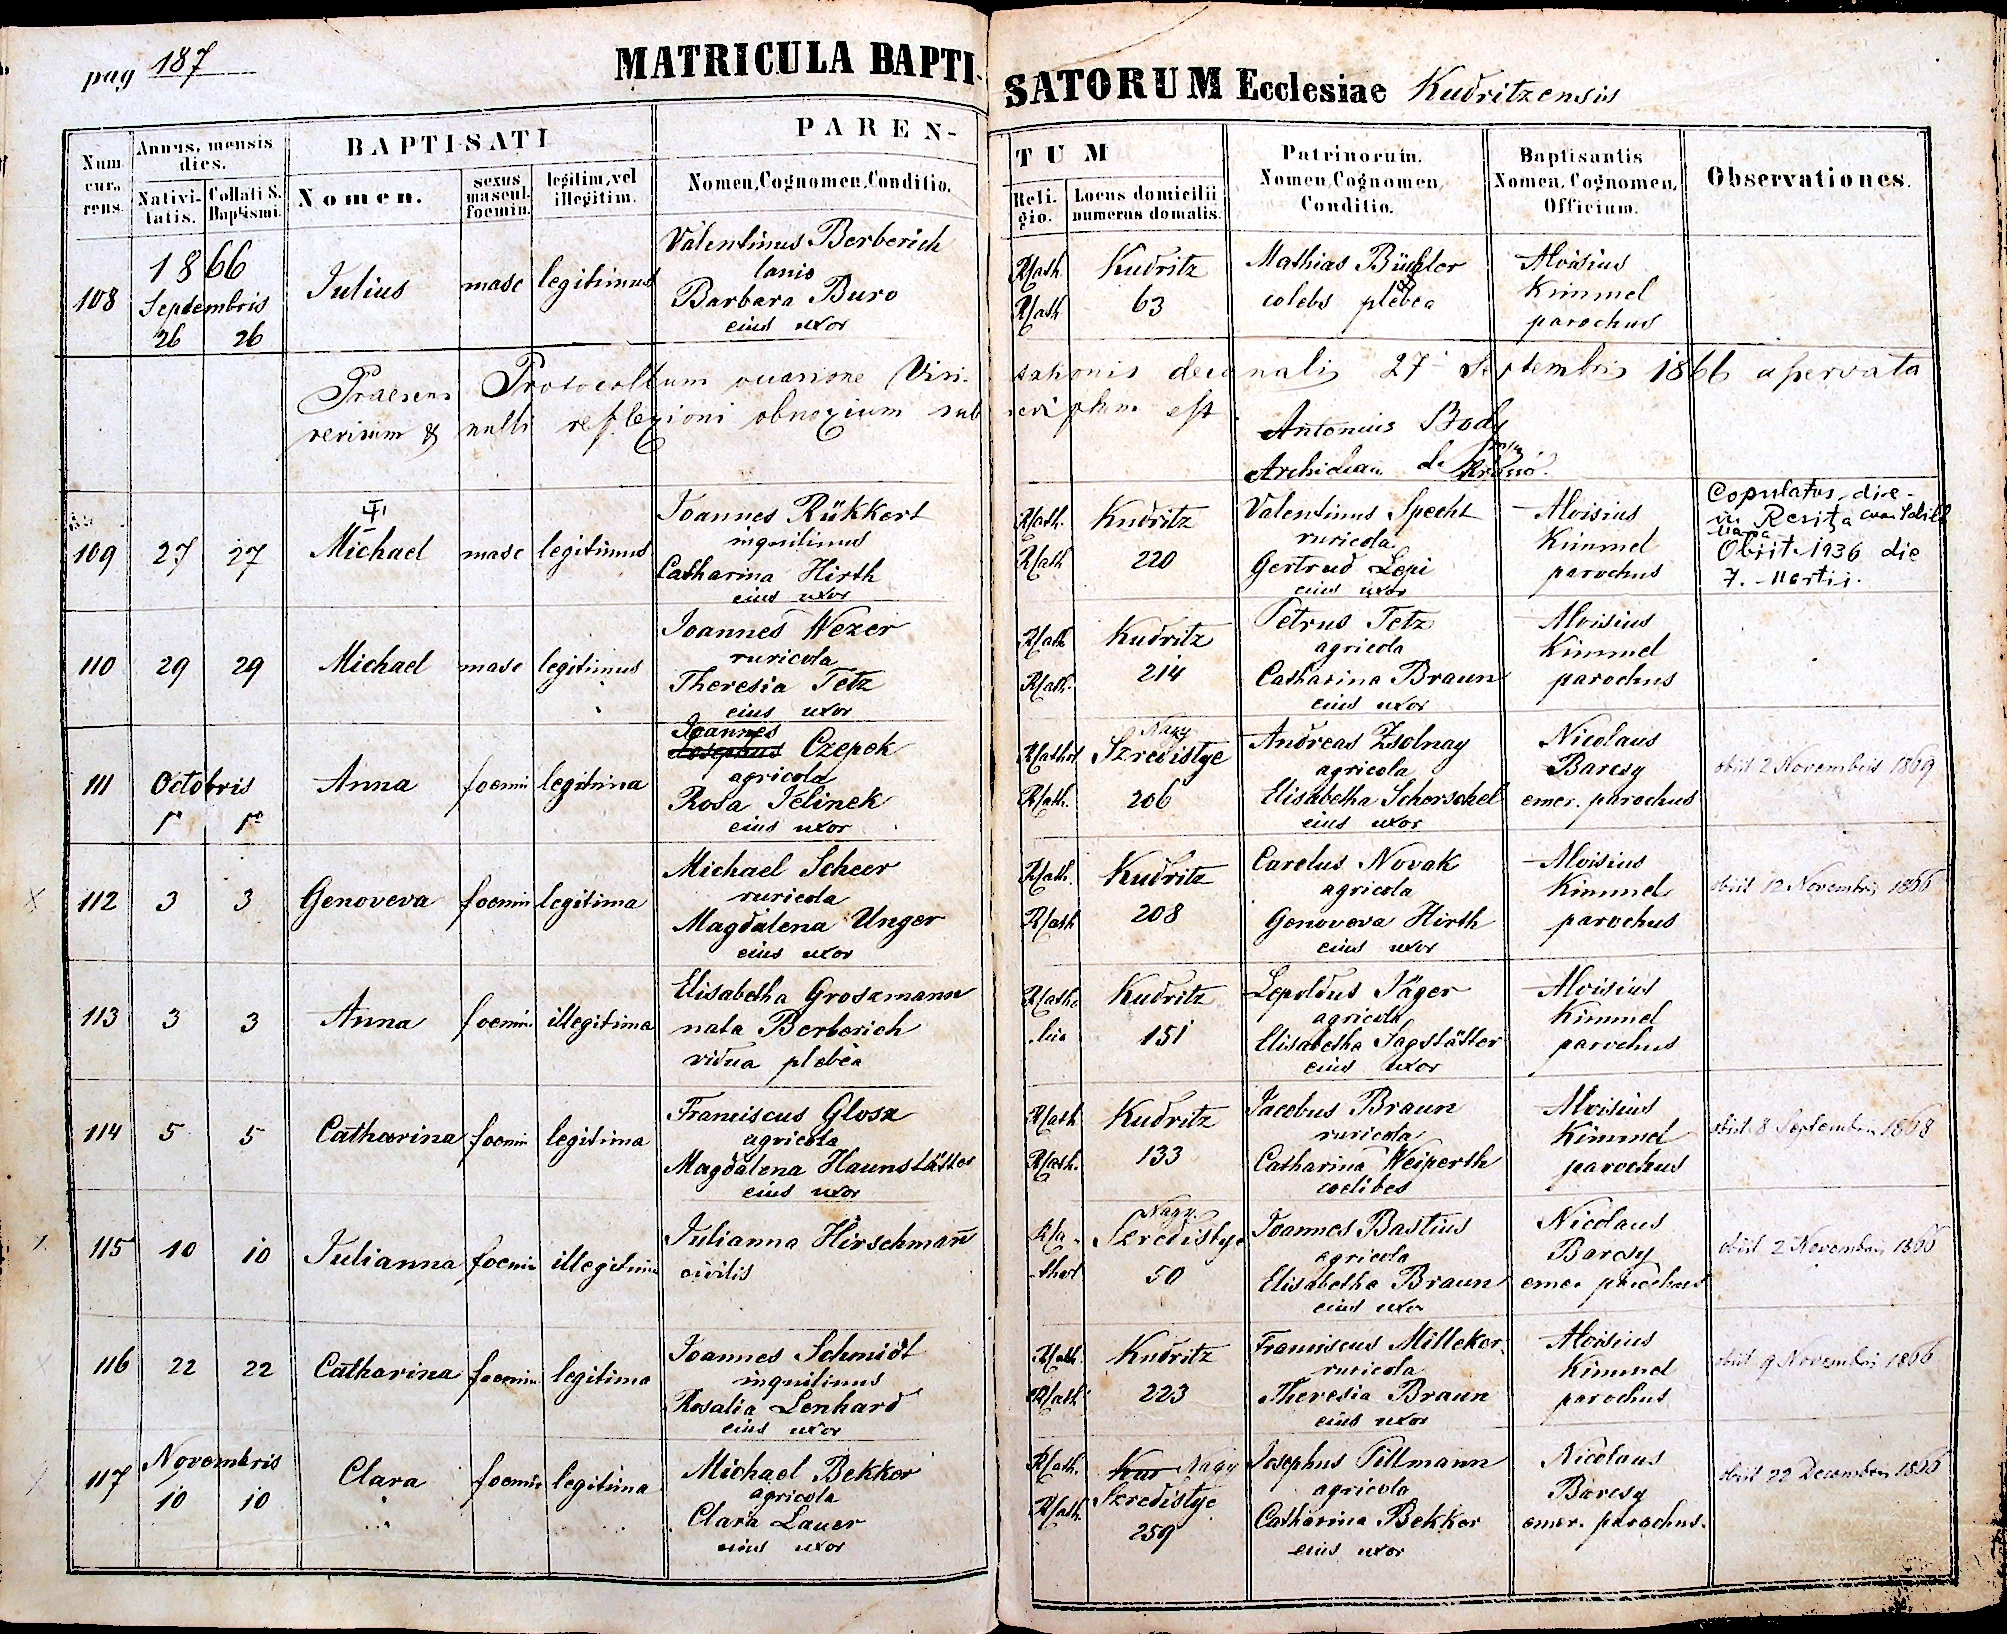 images/church_records/BIRTHS/1852-1870B/187